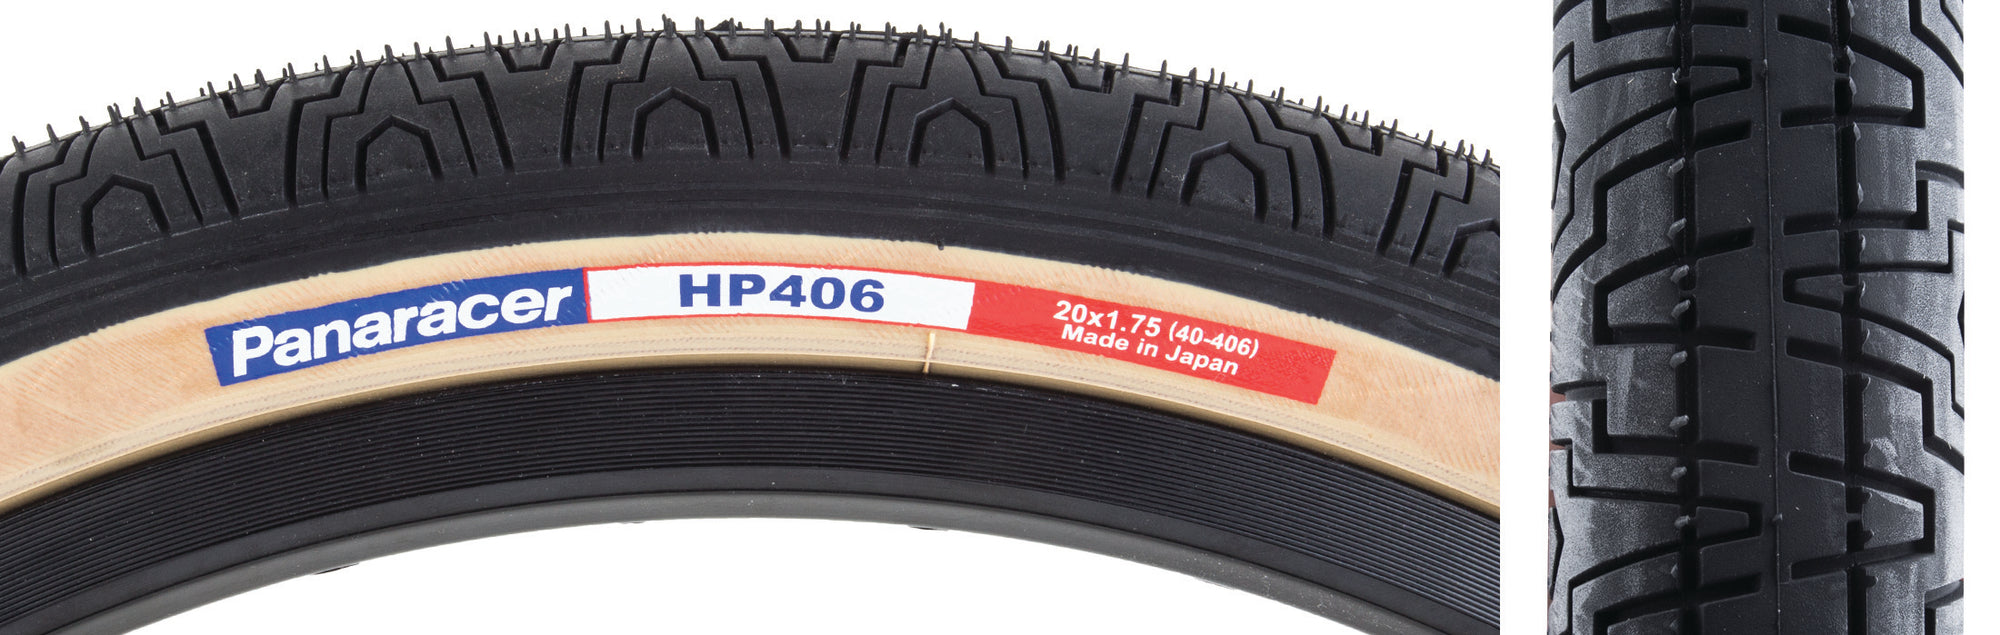 20x1.75 Panaracer HP406 Freestyle BMX tire - Black w/ Skinwall